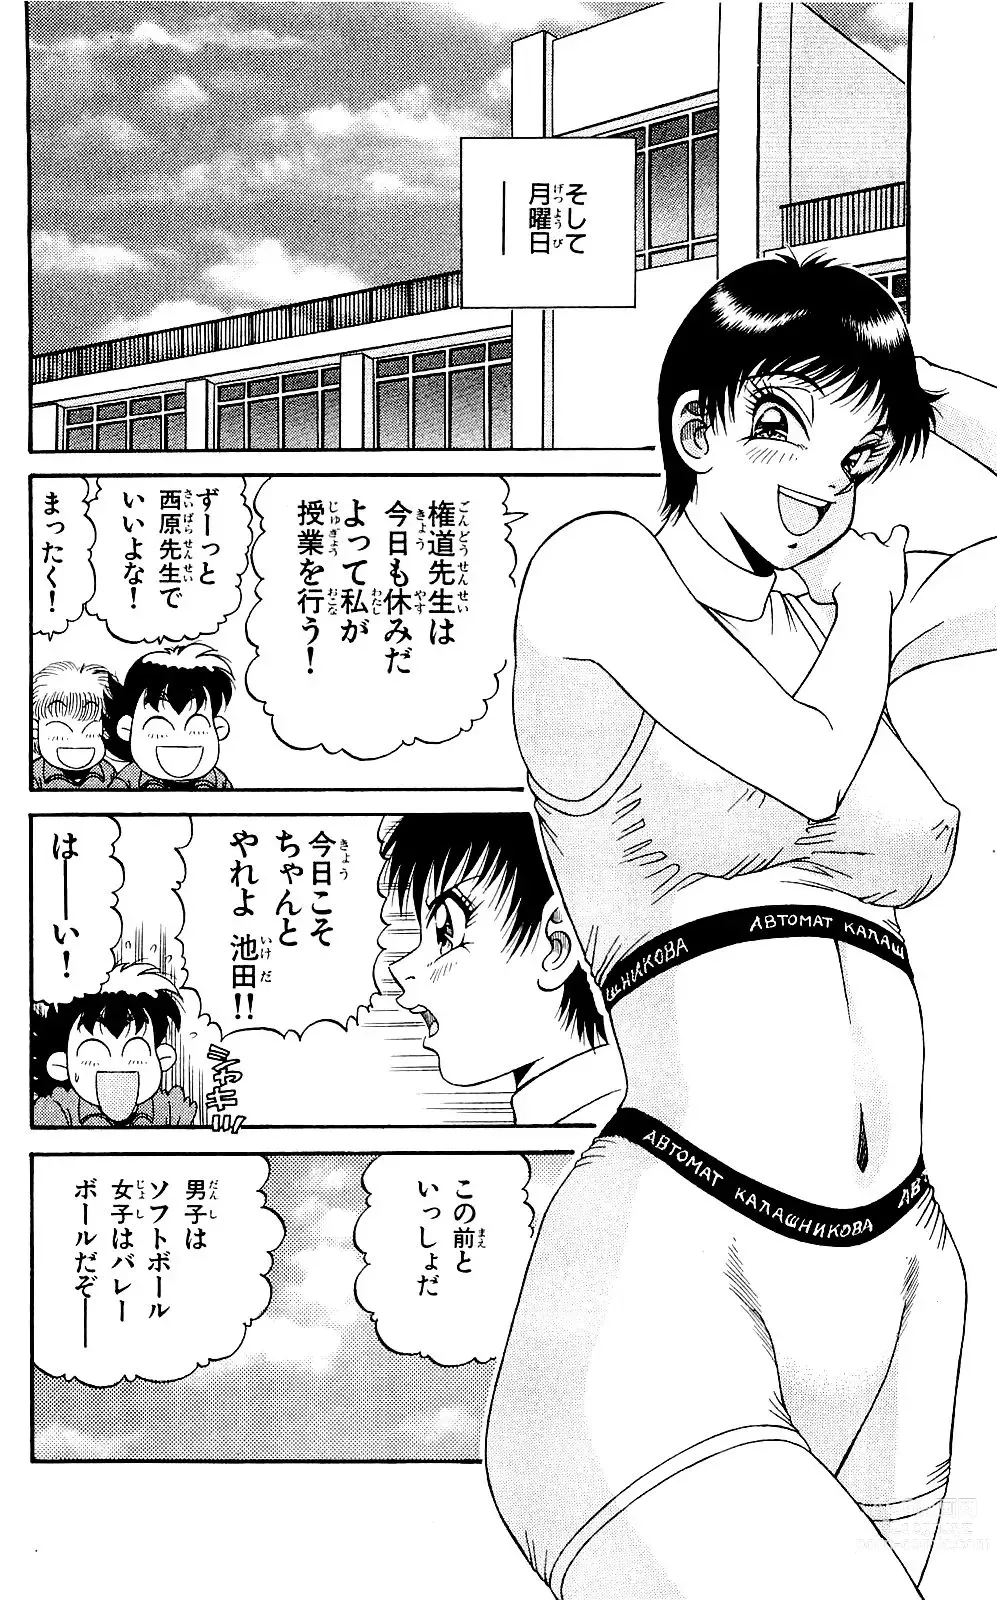 Page 14 of manga Orette Piyoritan 07